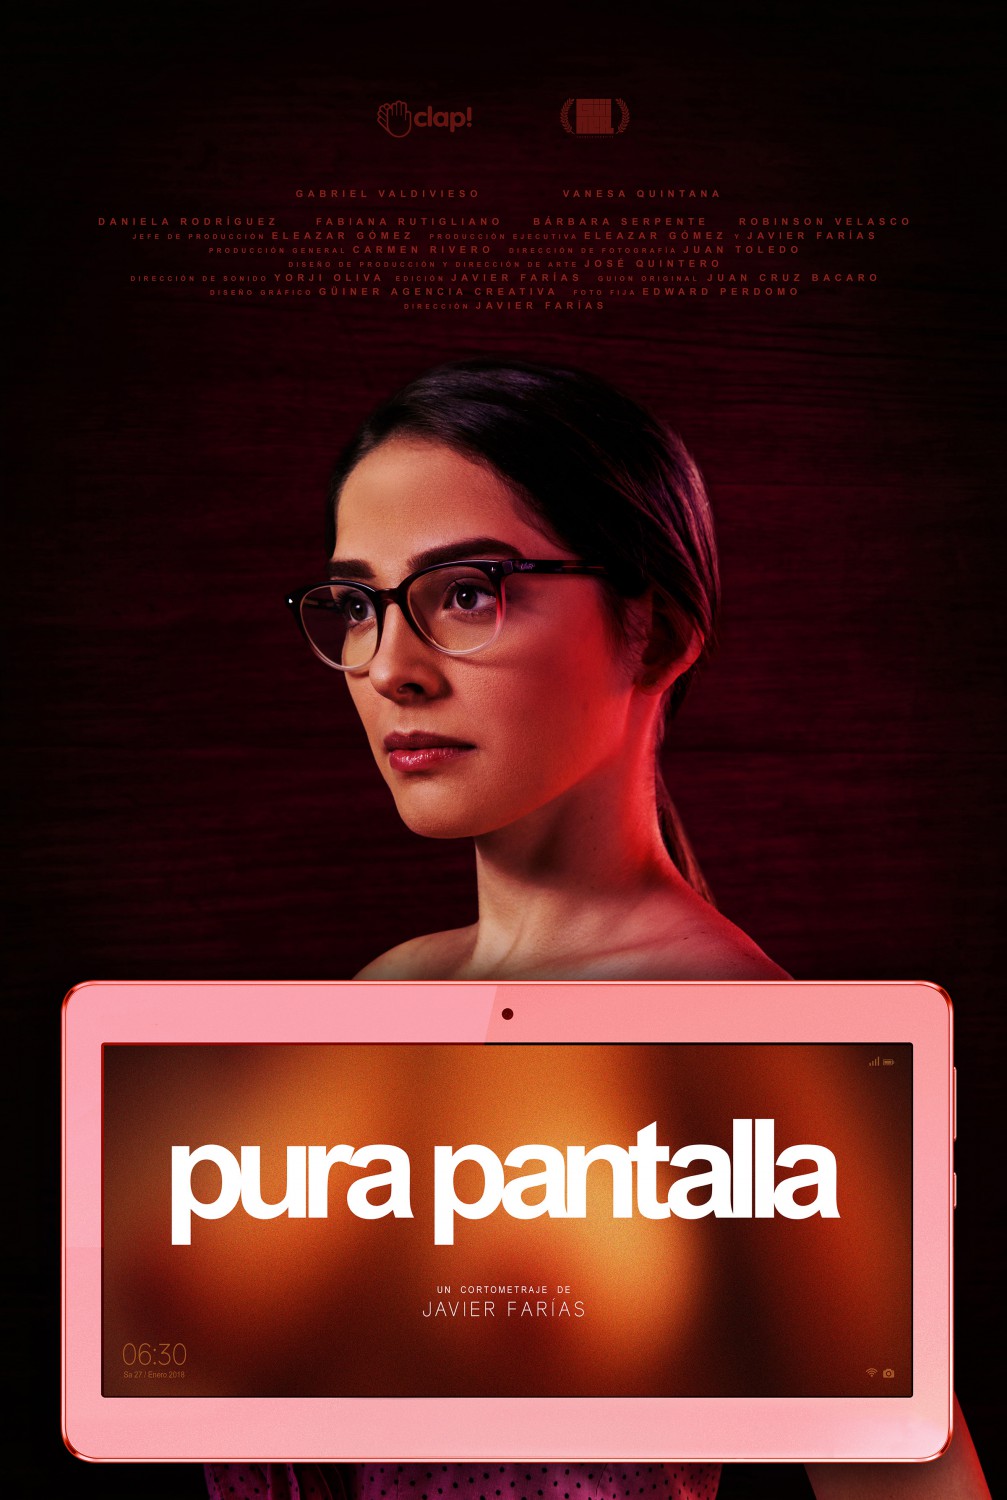 Extra Large Movie Poster Image for Pura Pantalla